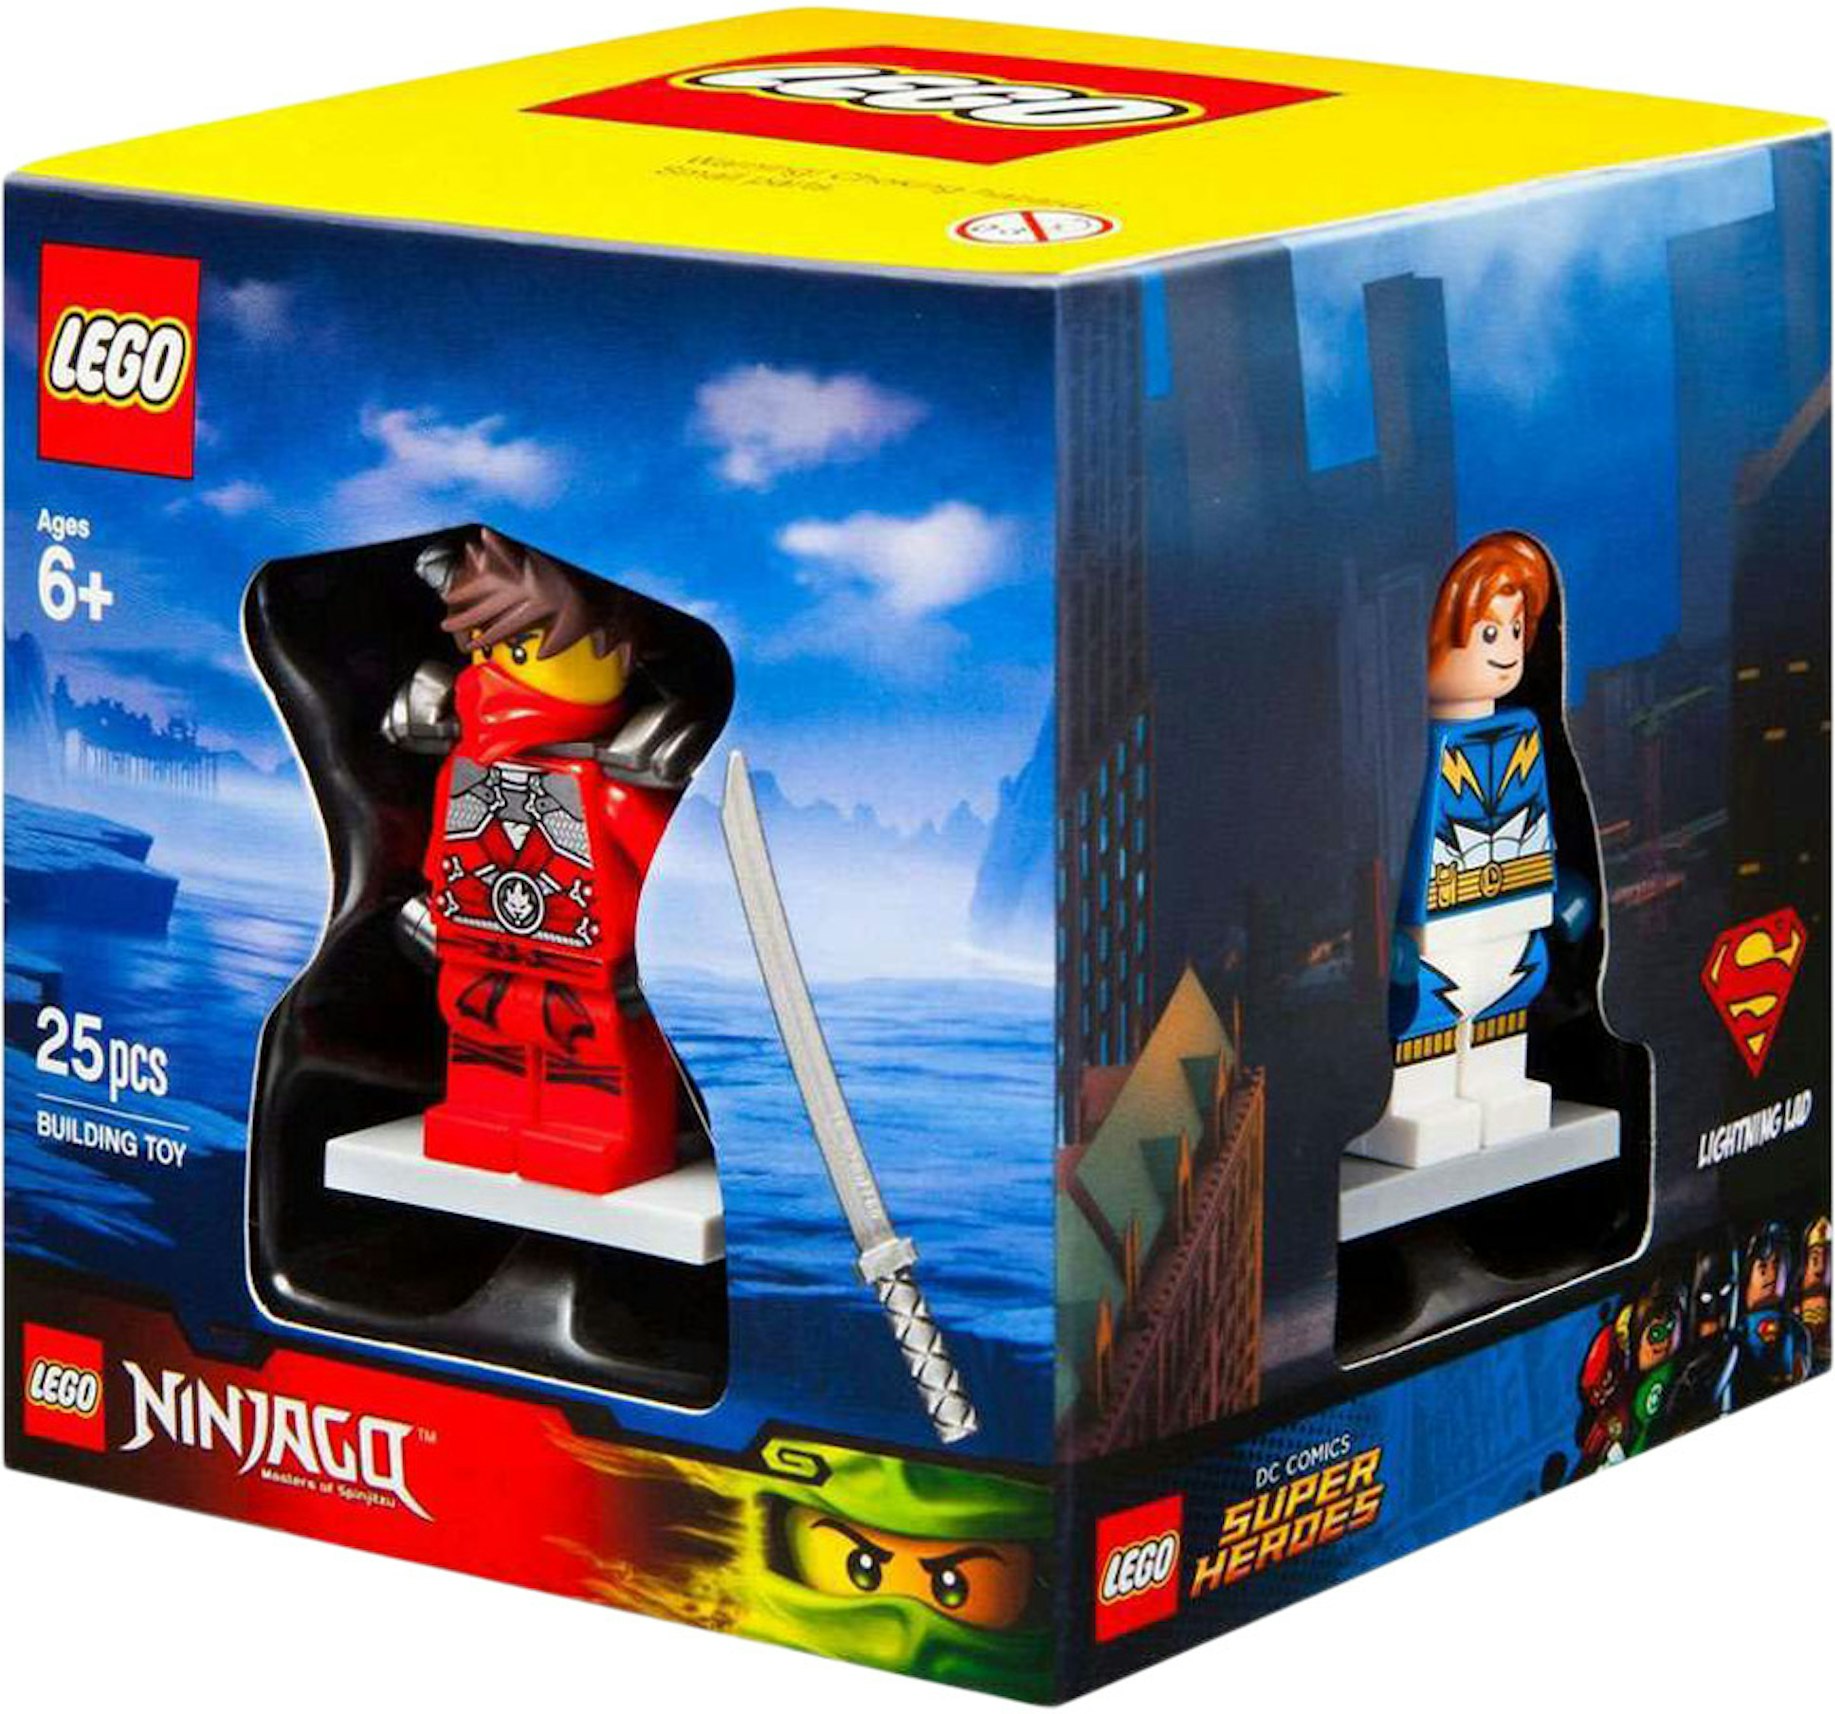 LEGO Ninjago 2015 Boxed 4-Pack Set - US